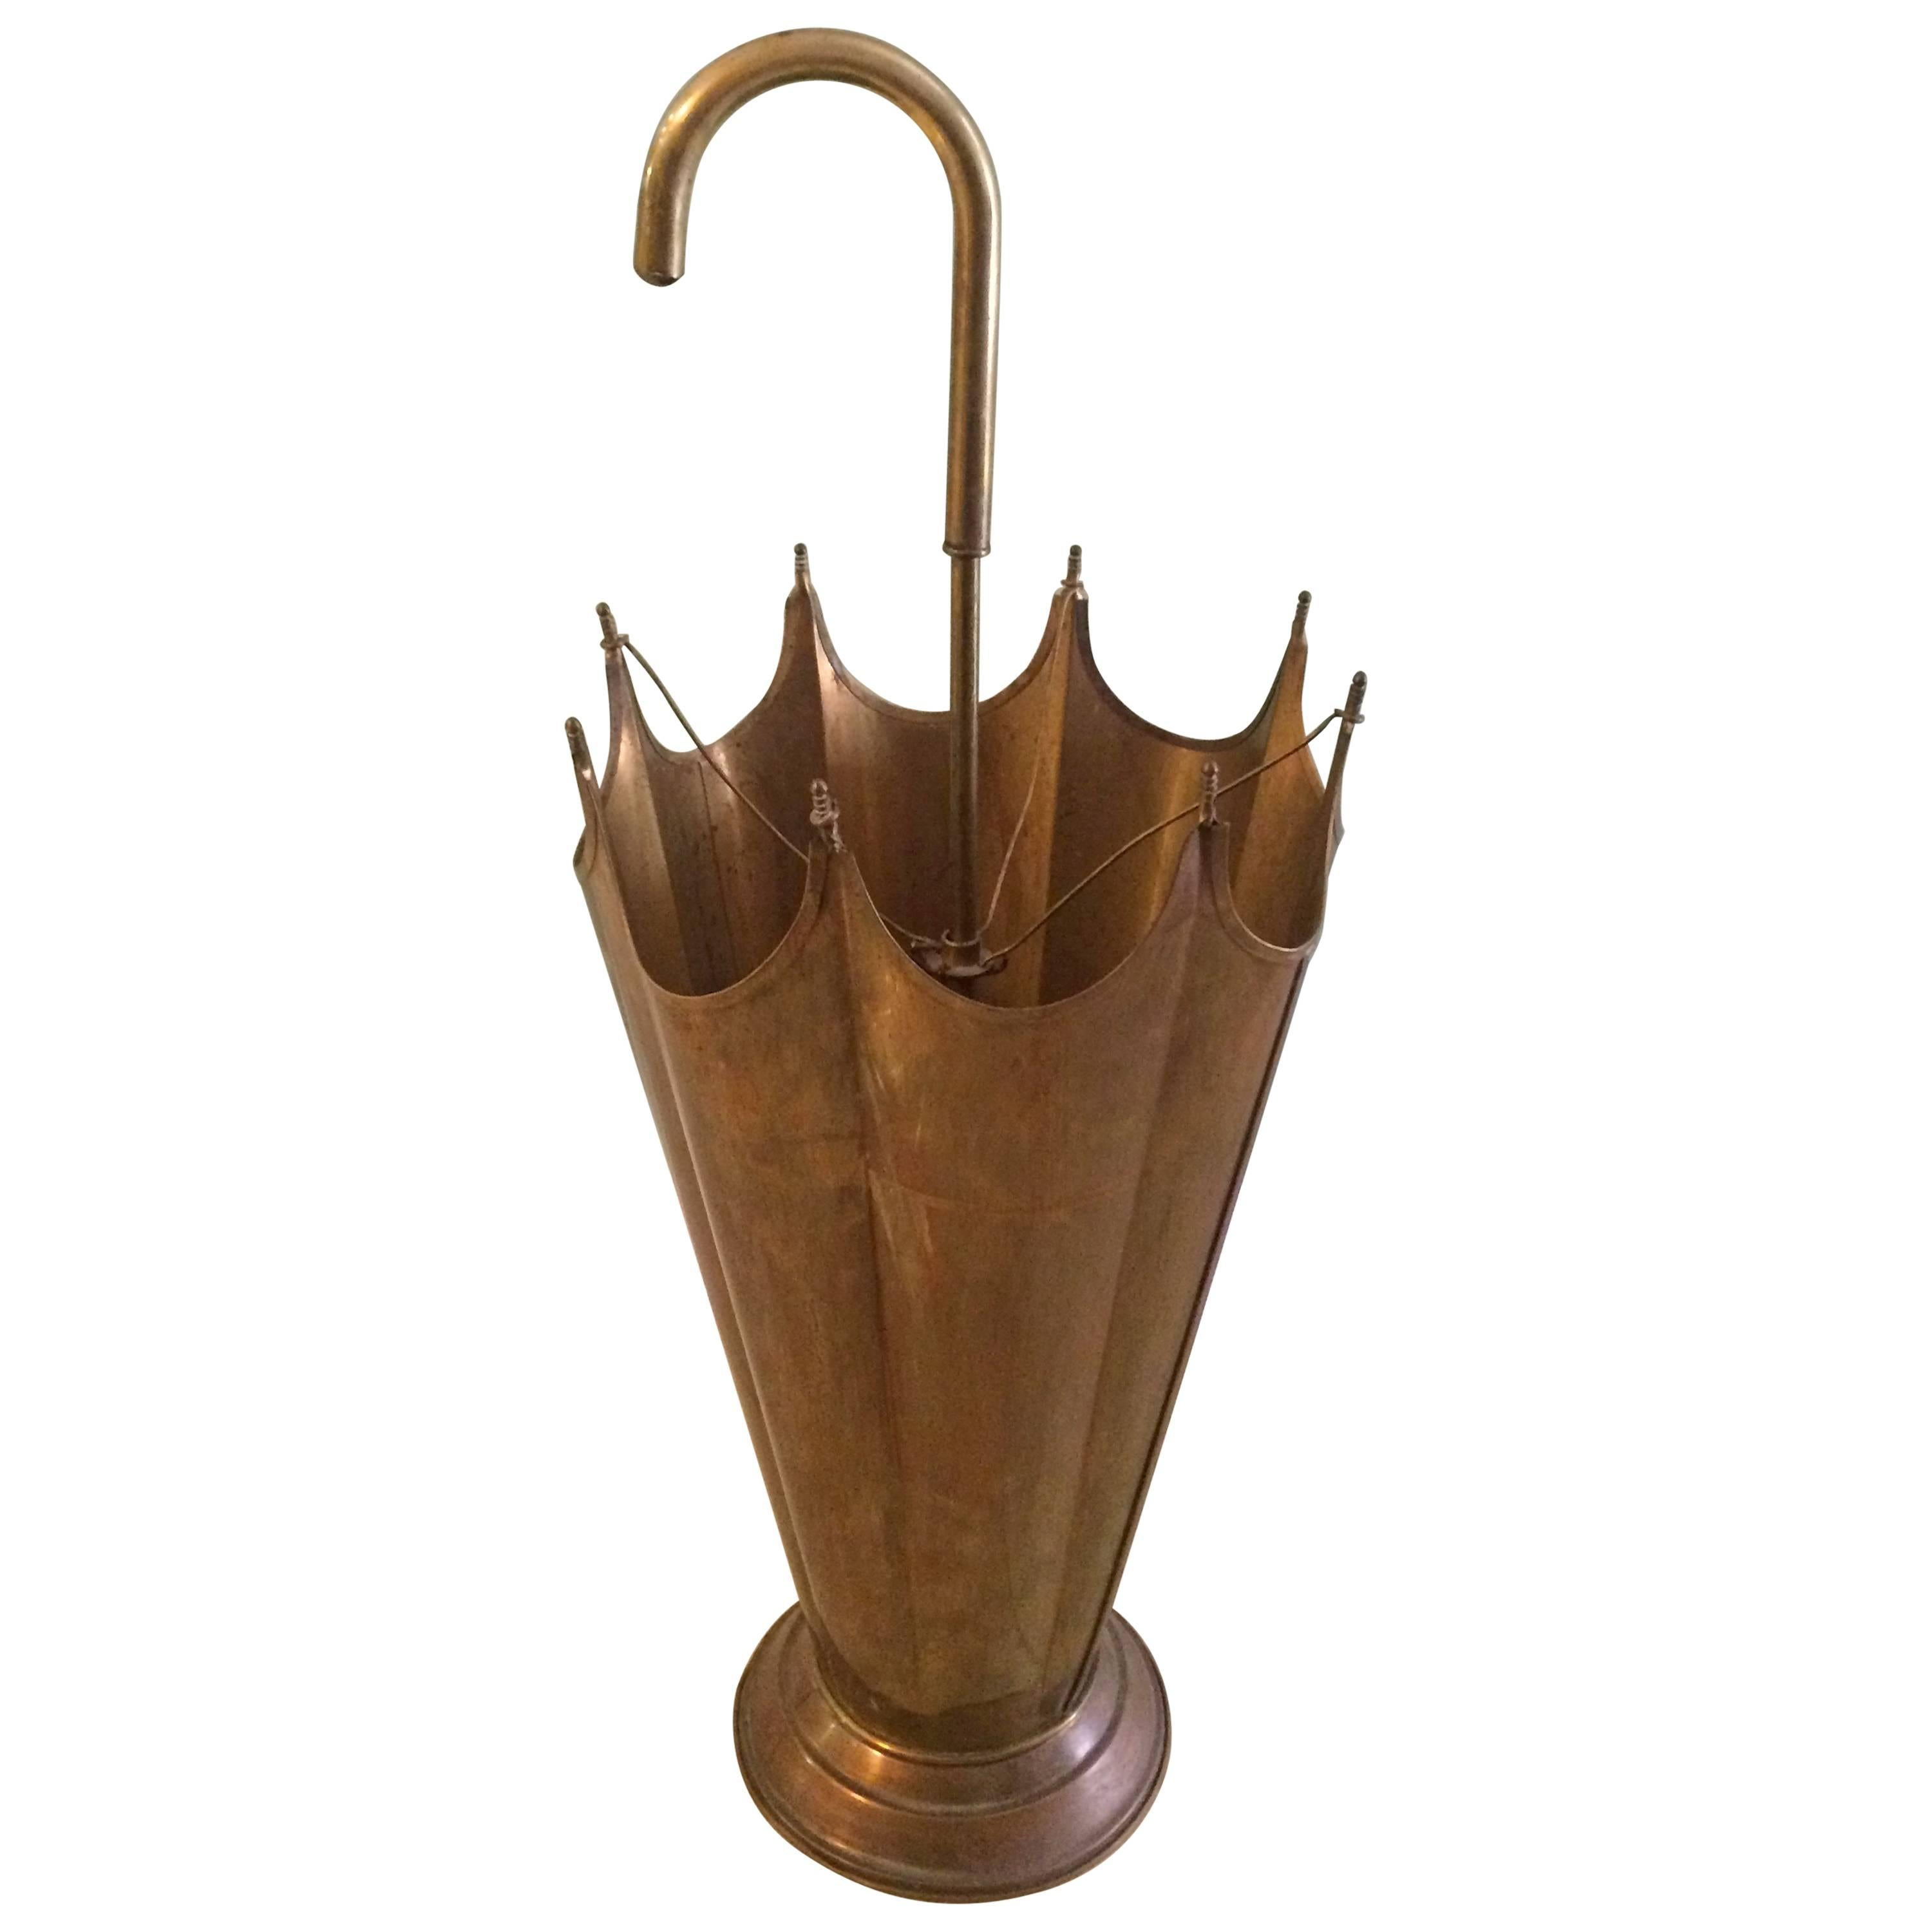 Vintage French Brass Umbrella Shaped Umbrella Stand